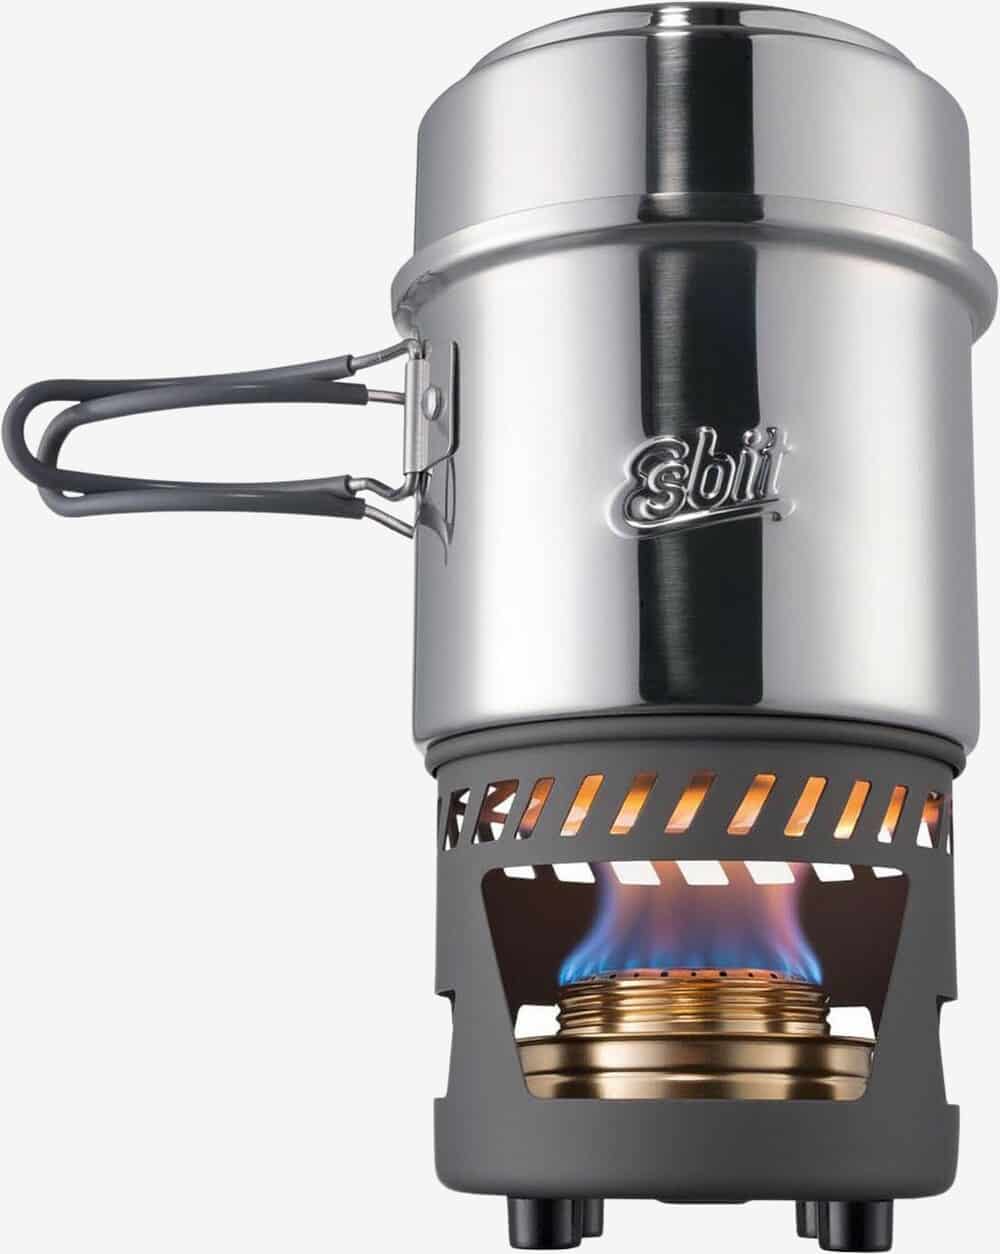 Se Esbit Cookset With Alcohol Burner, 985 Ml (Grå (STAINLESS STEEL)) hos Friluft.dk